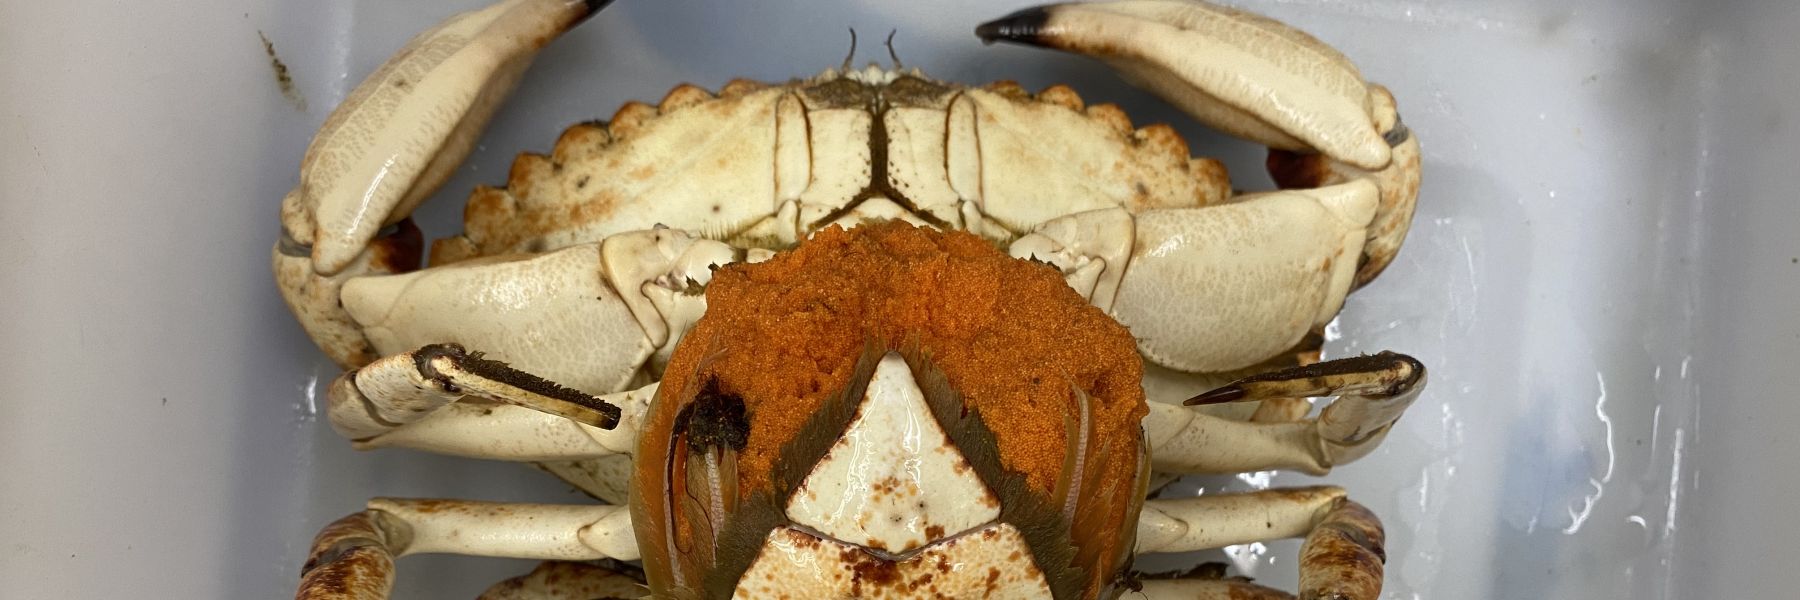 Yellow rock crab (Cancer antennarius) egg mass. Credit: Zoe Zilz